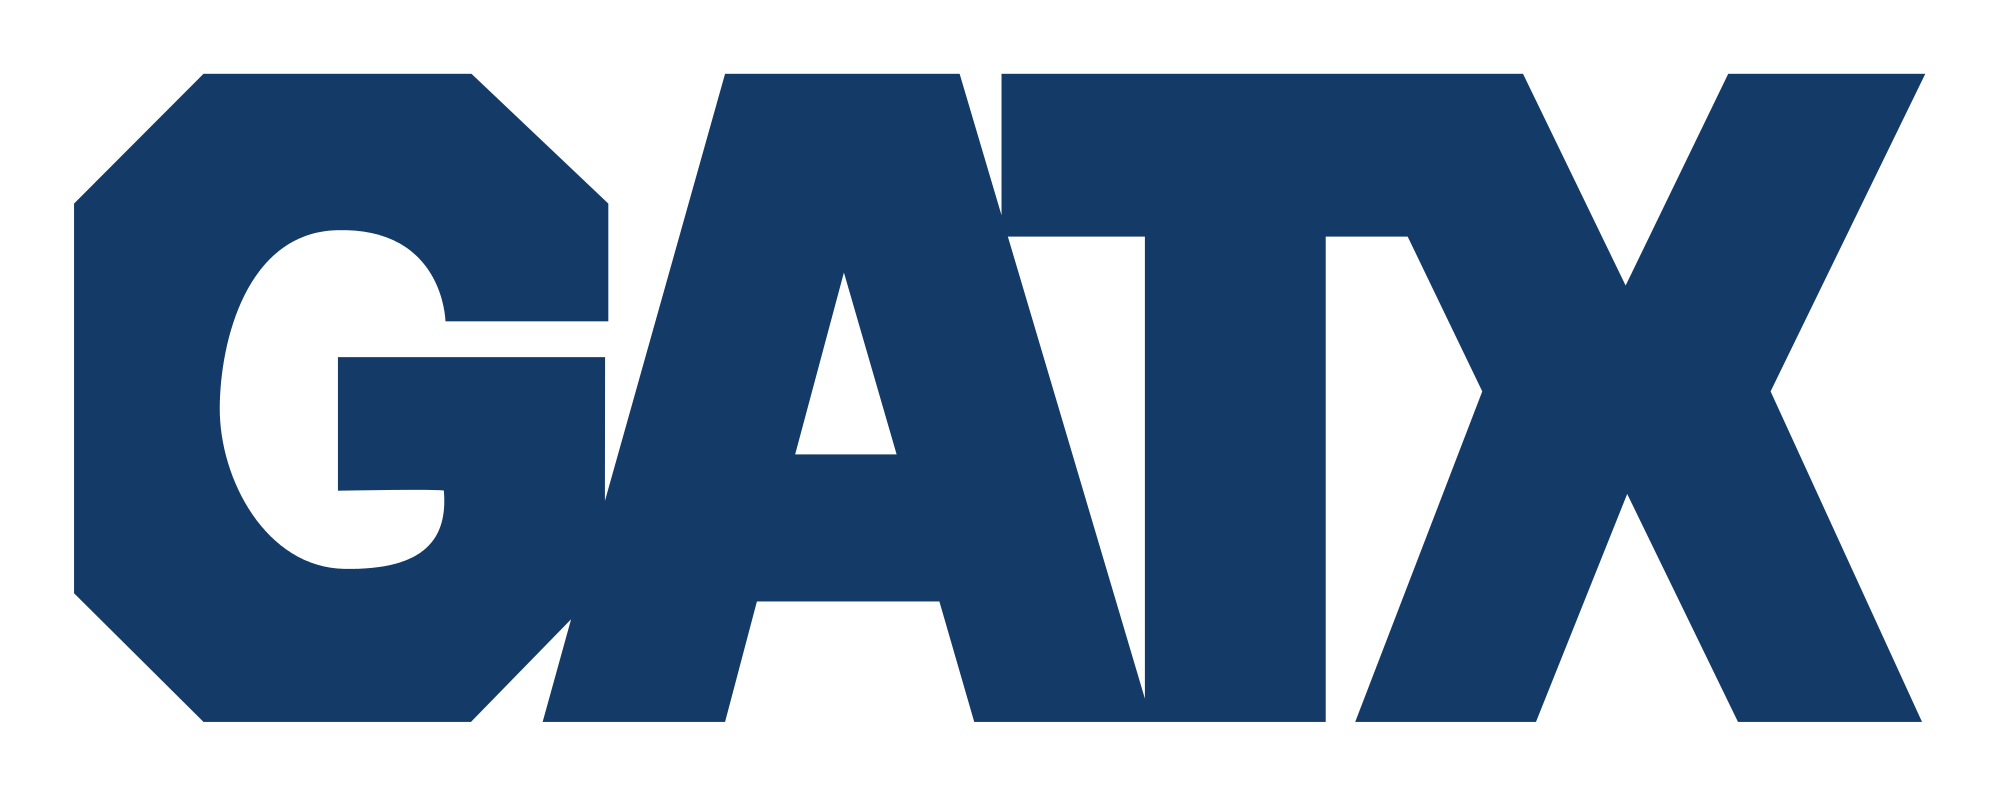 GATX Corporation logo